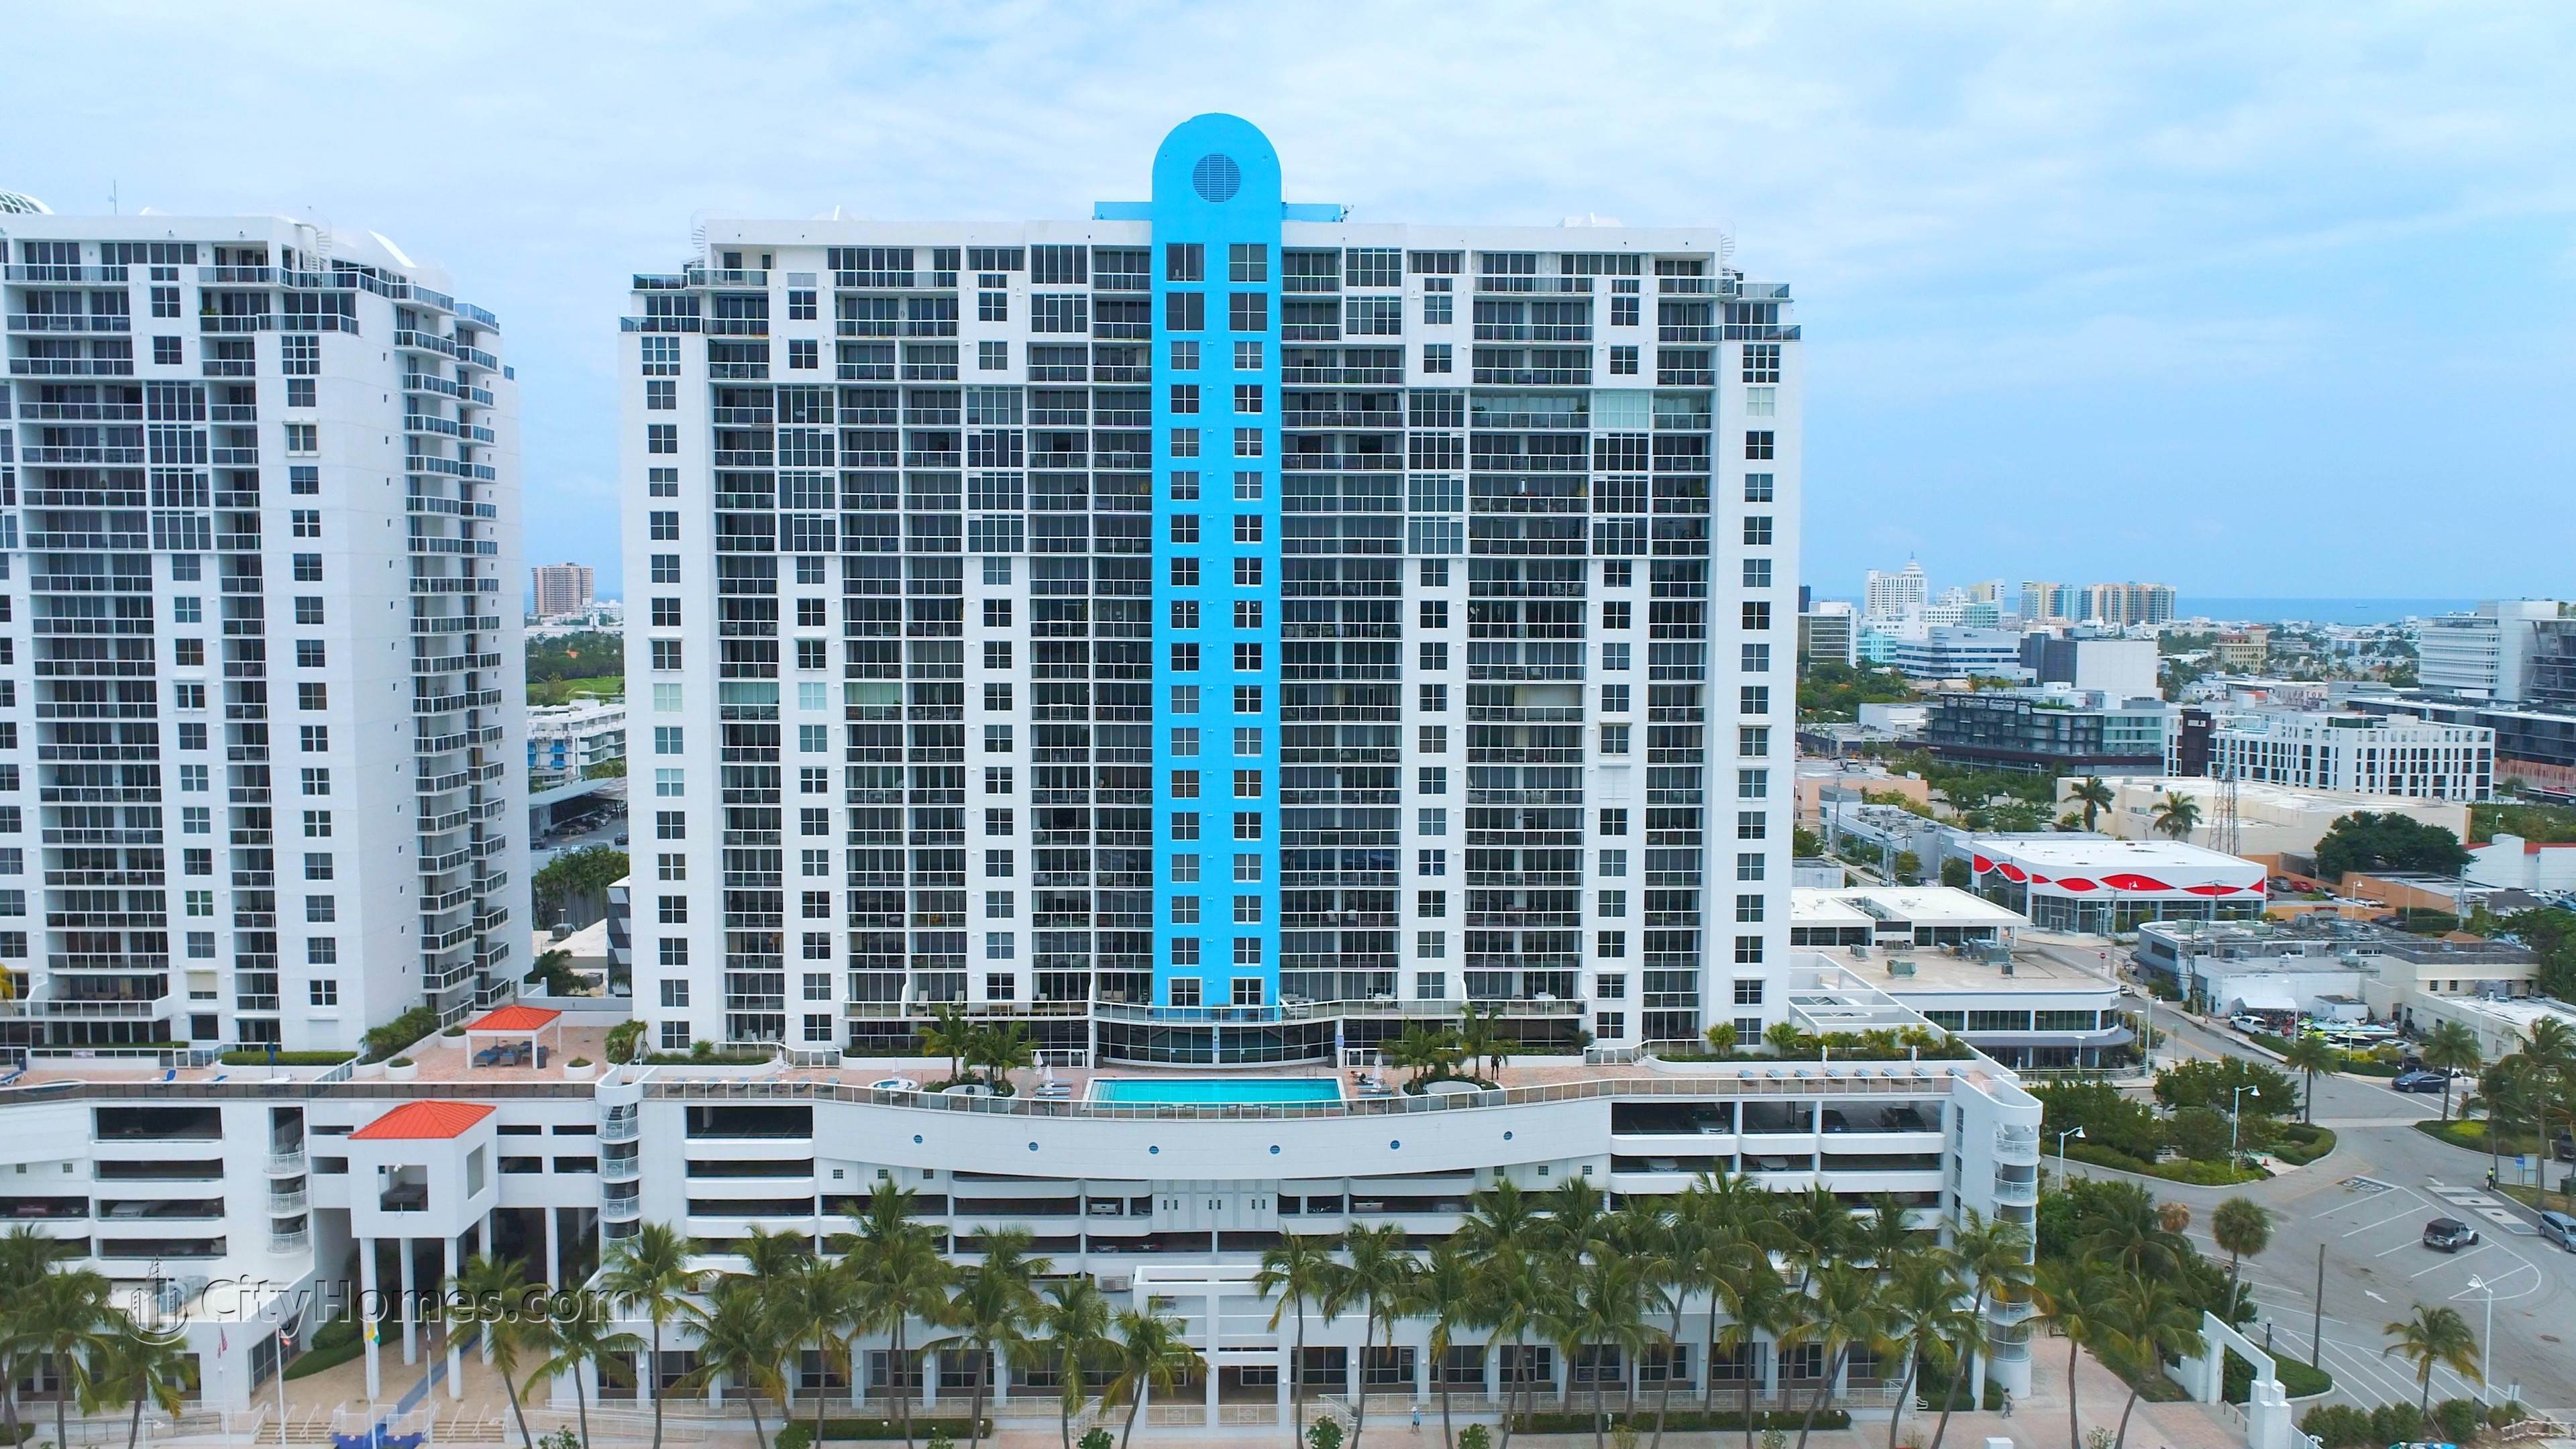 SUNSET HARBOUR SOUTH edificio a 1800 Sunset Harbour Drive, Mid Beach, Miami Beach, FL 33139